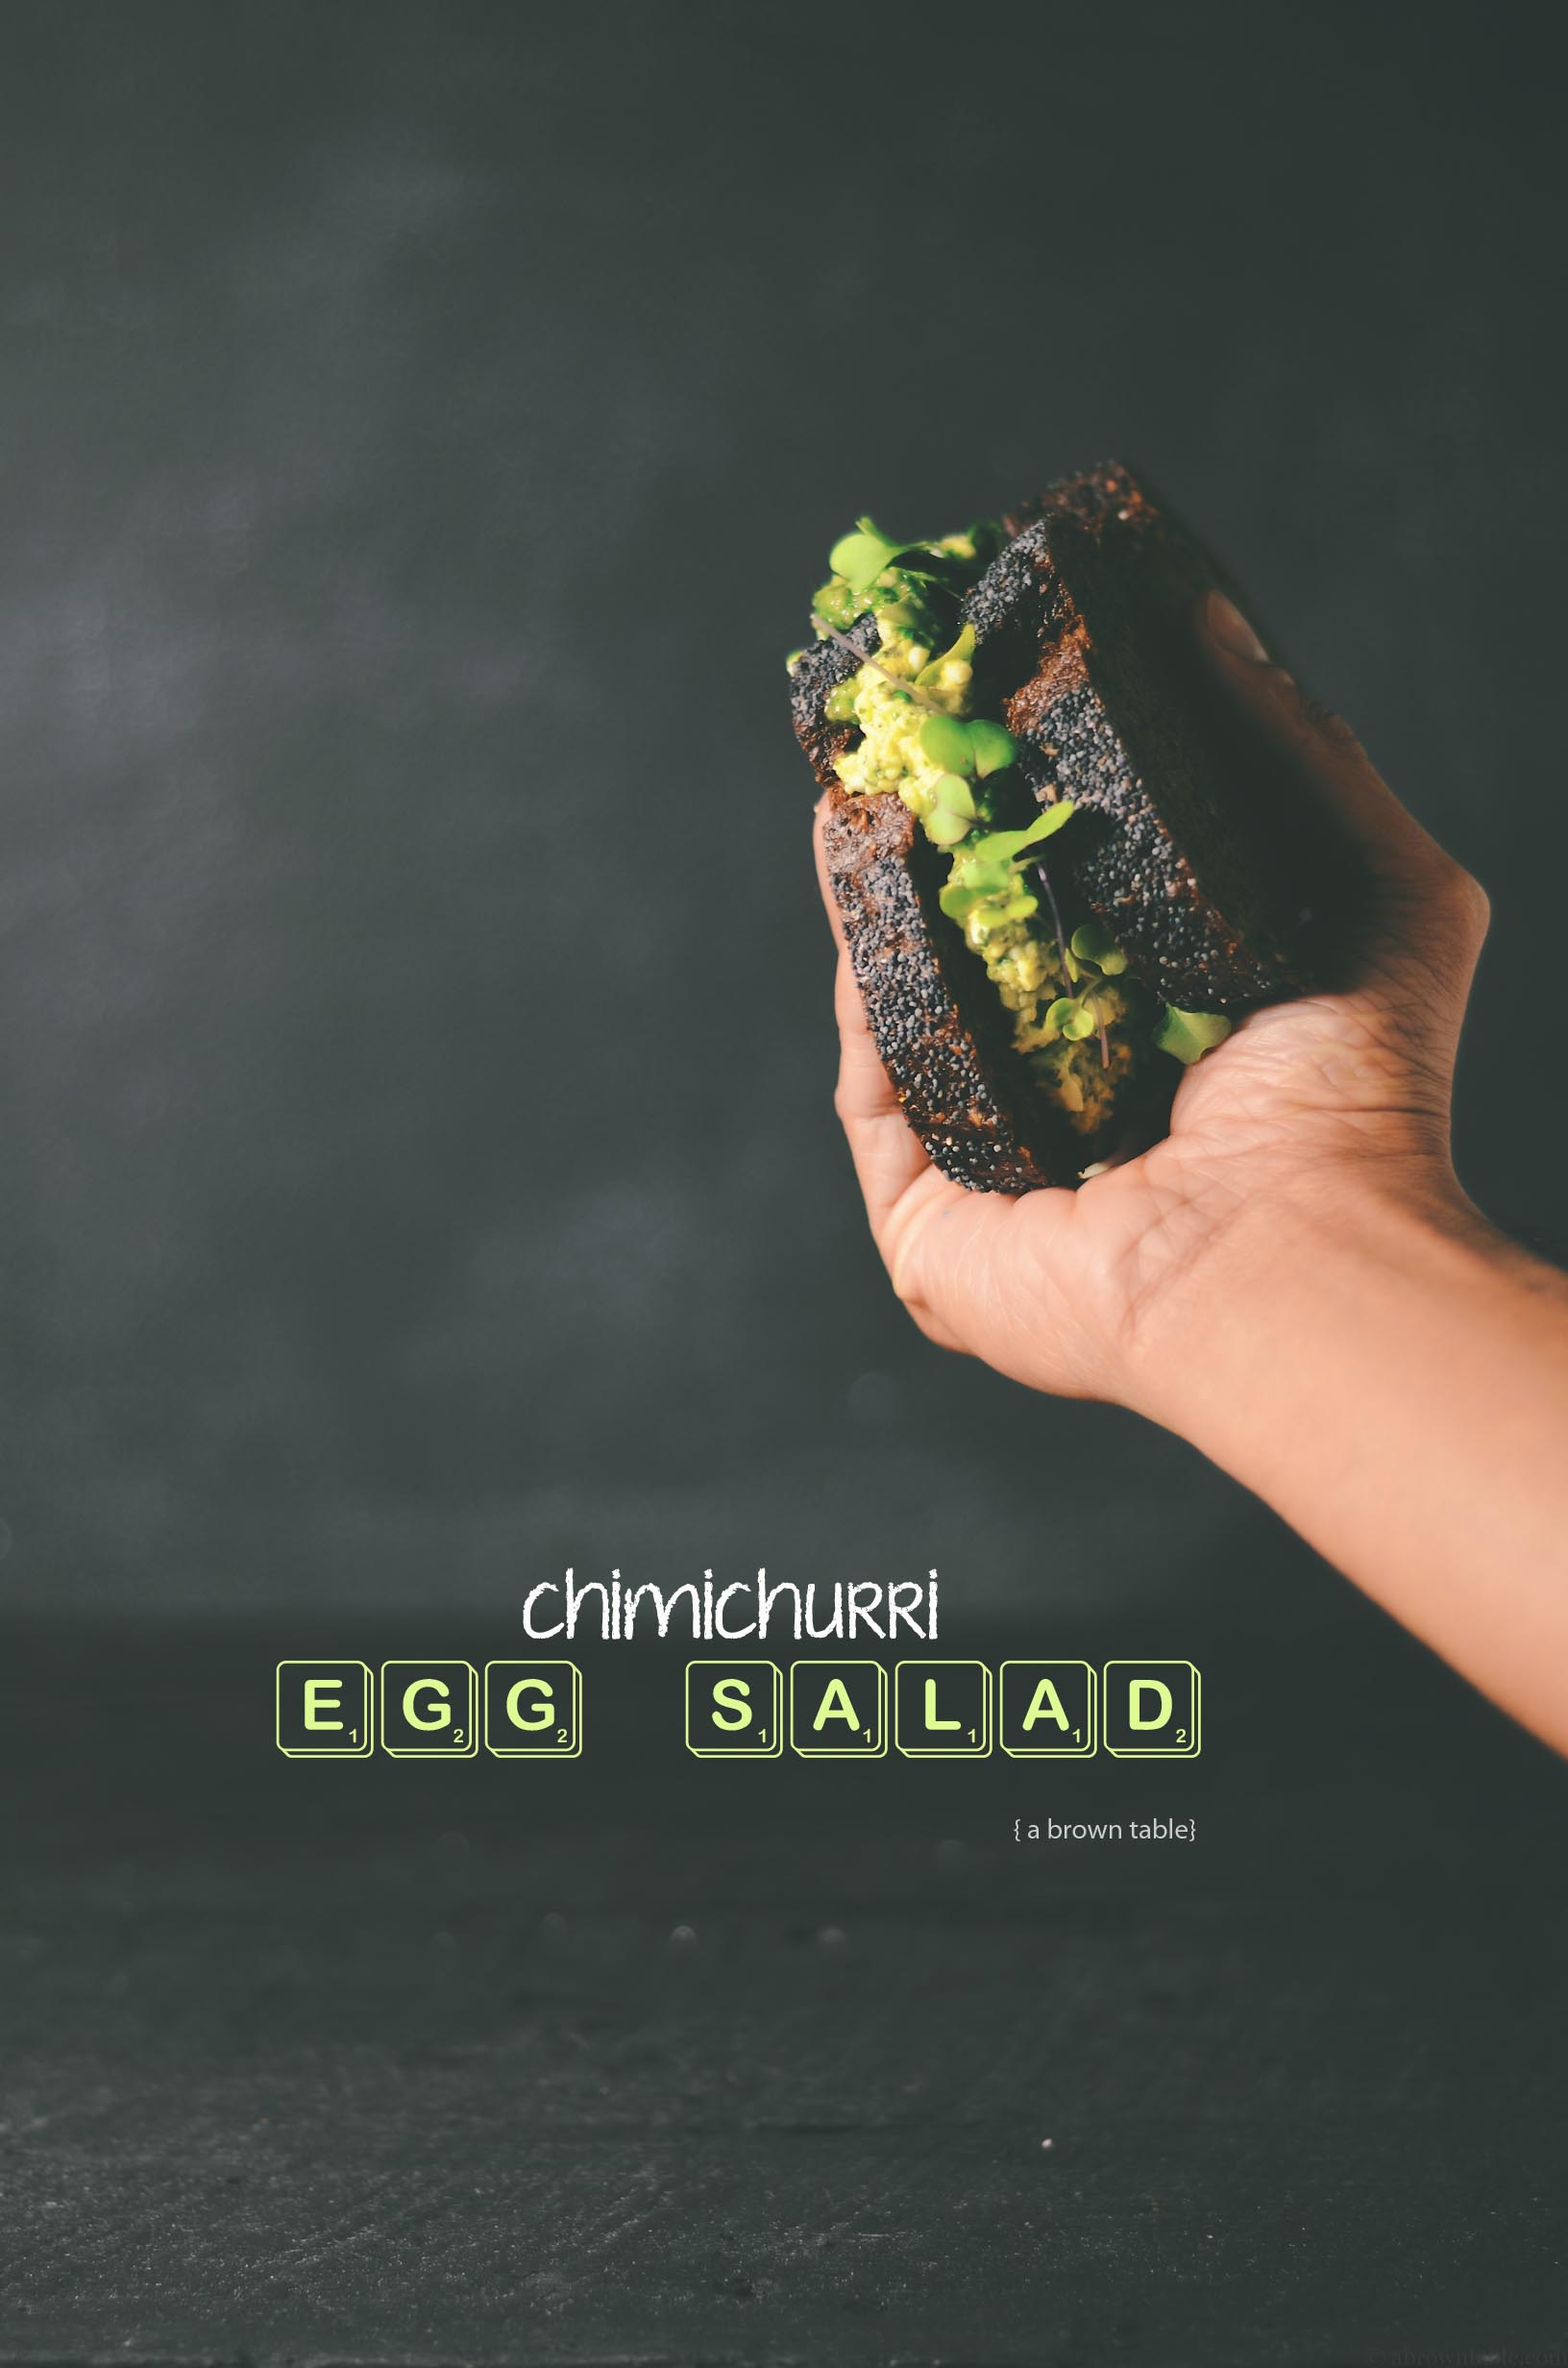 chimichurri egg salad sandwich